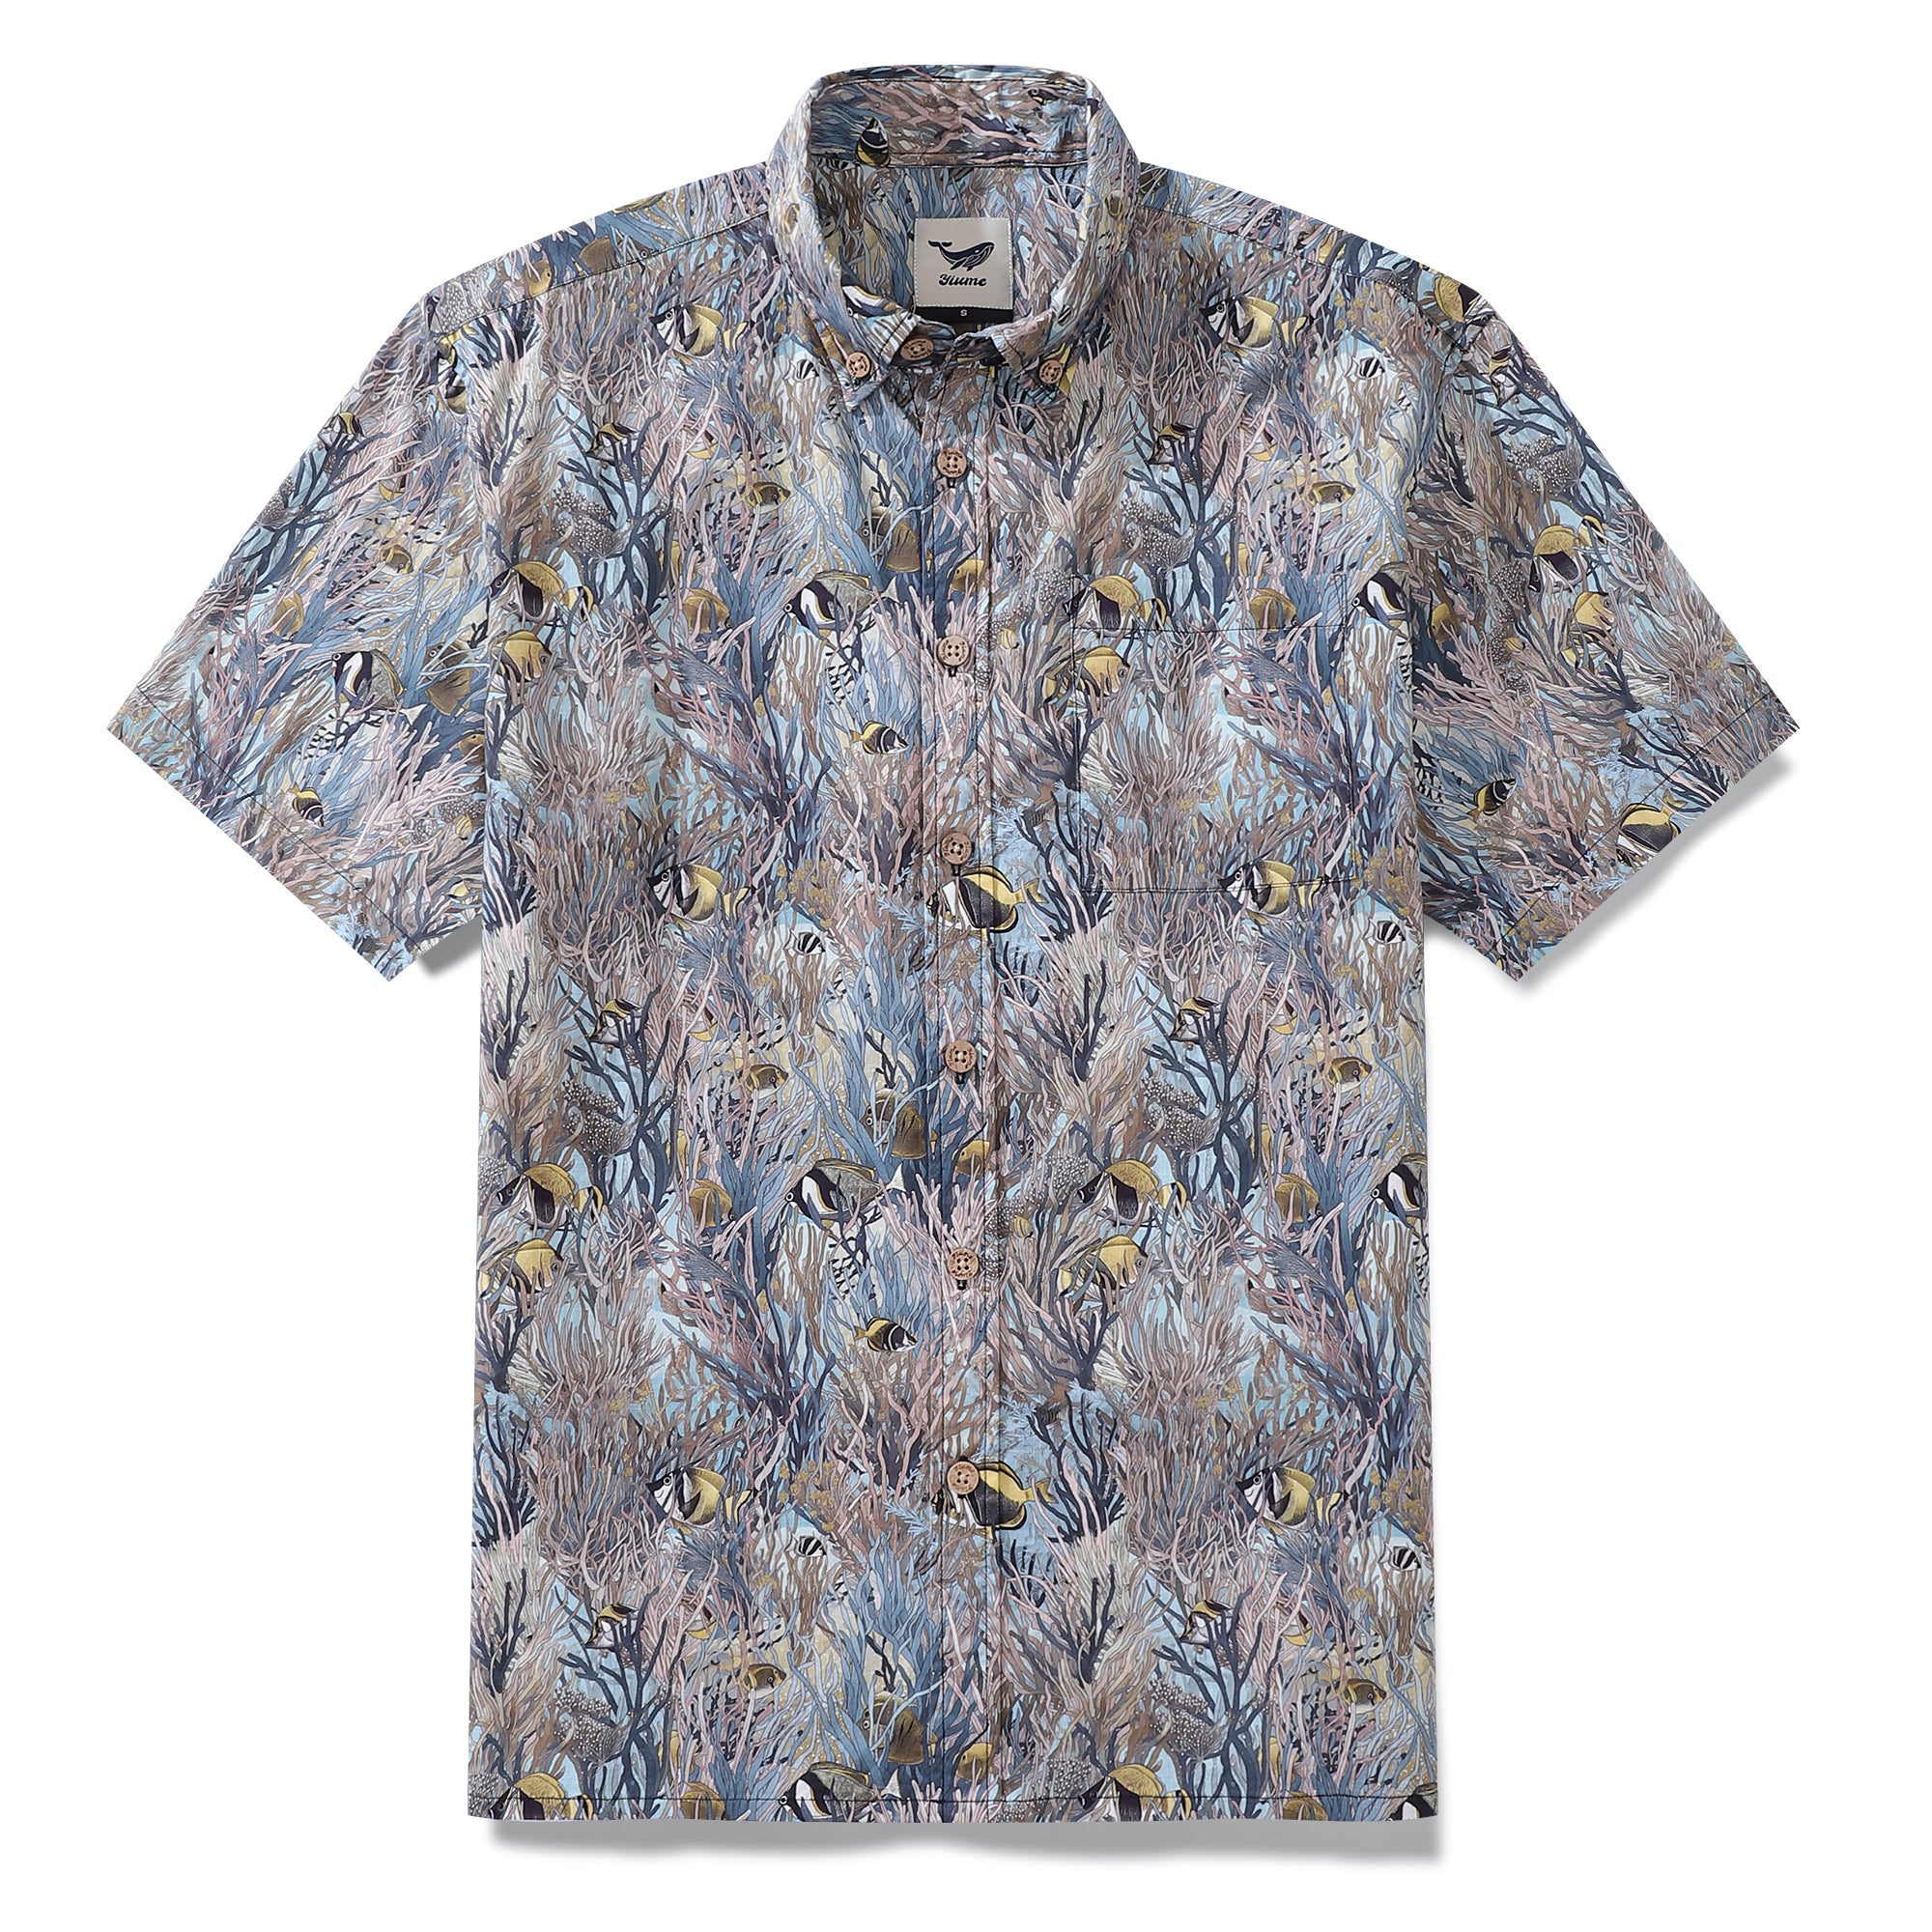 Men's Hawaiian Shirt Dance of the Tropical Fish Print Cotton Button-down Short Sleeve Aloha Shirt